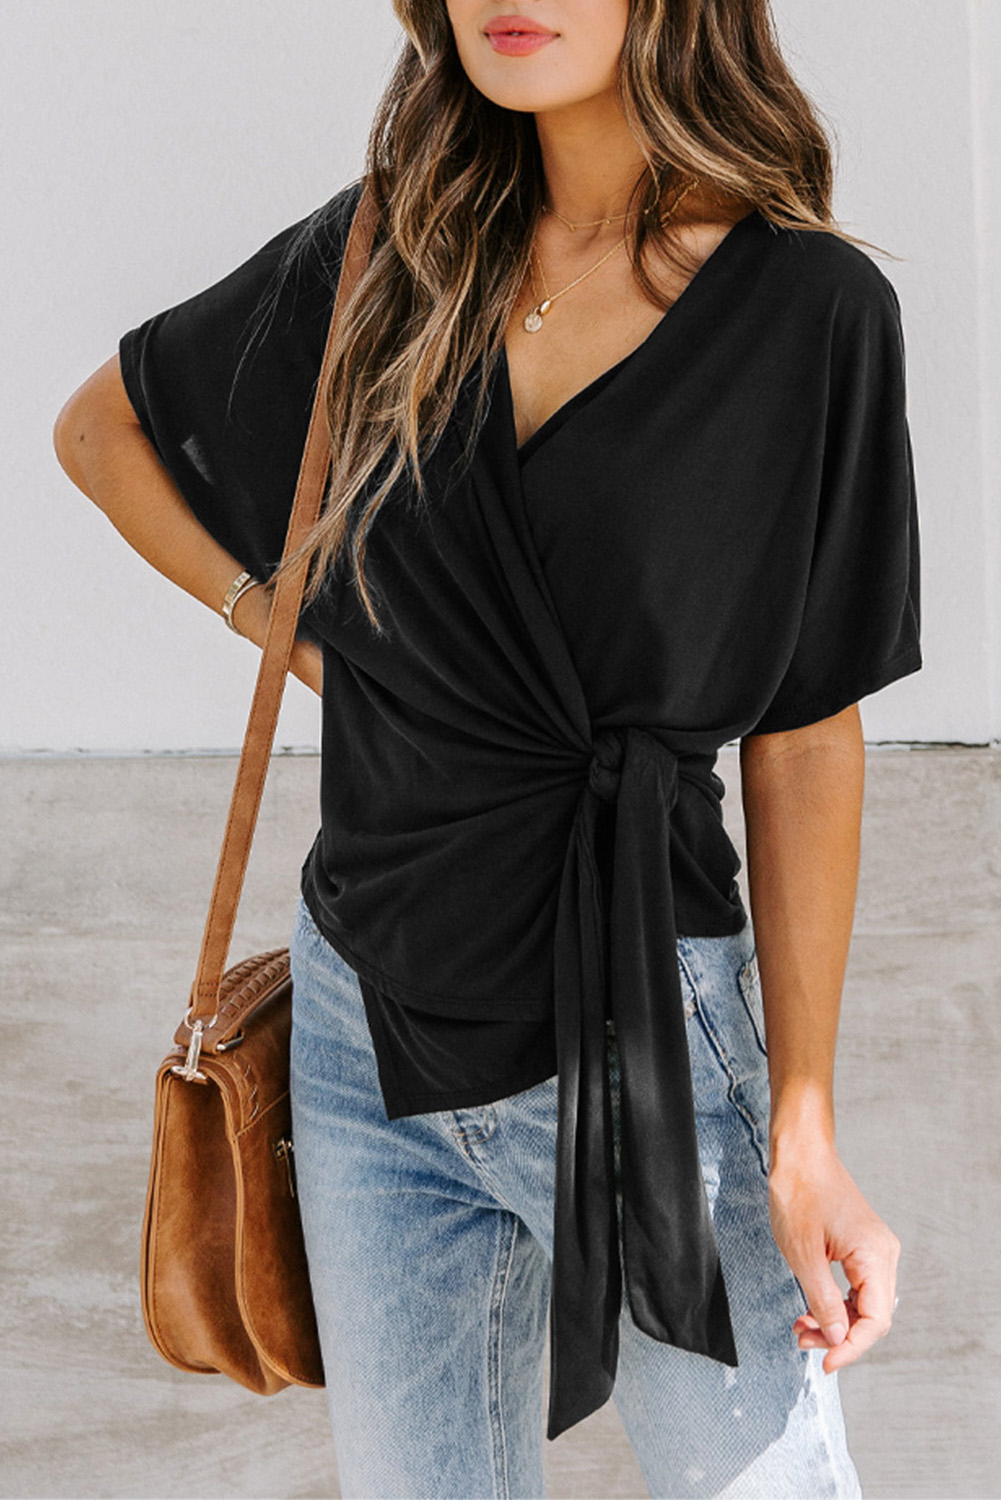 US$ 6.79 Drop-shipping Black Short Sleeve Wrap Top for Women